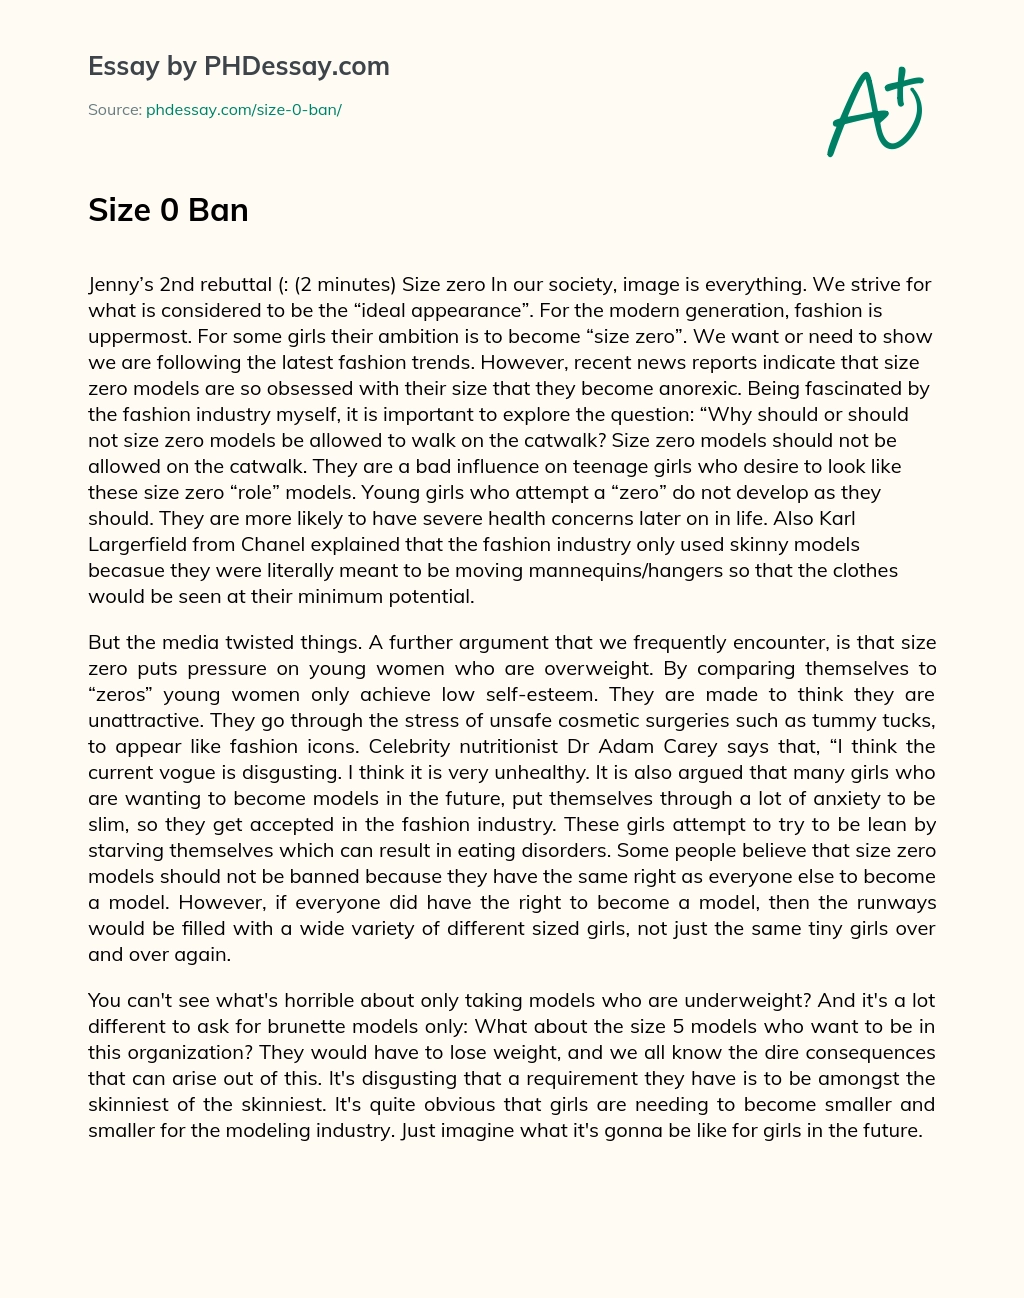 Size 0 Ban essay